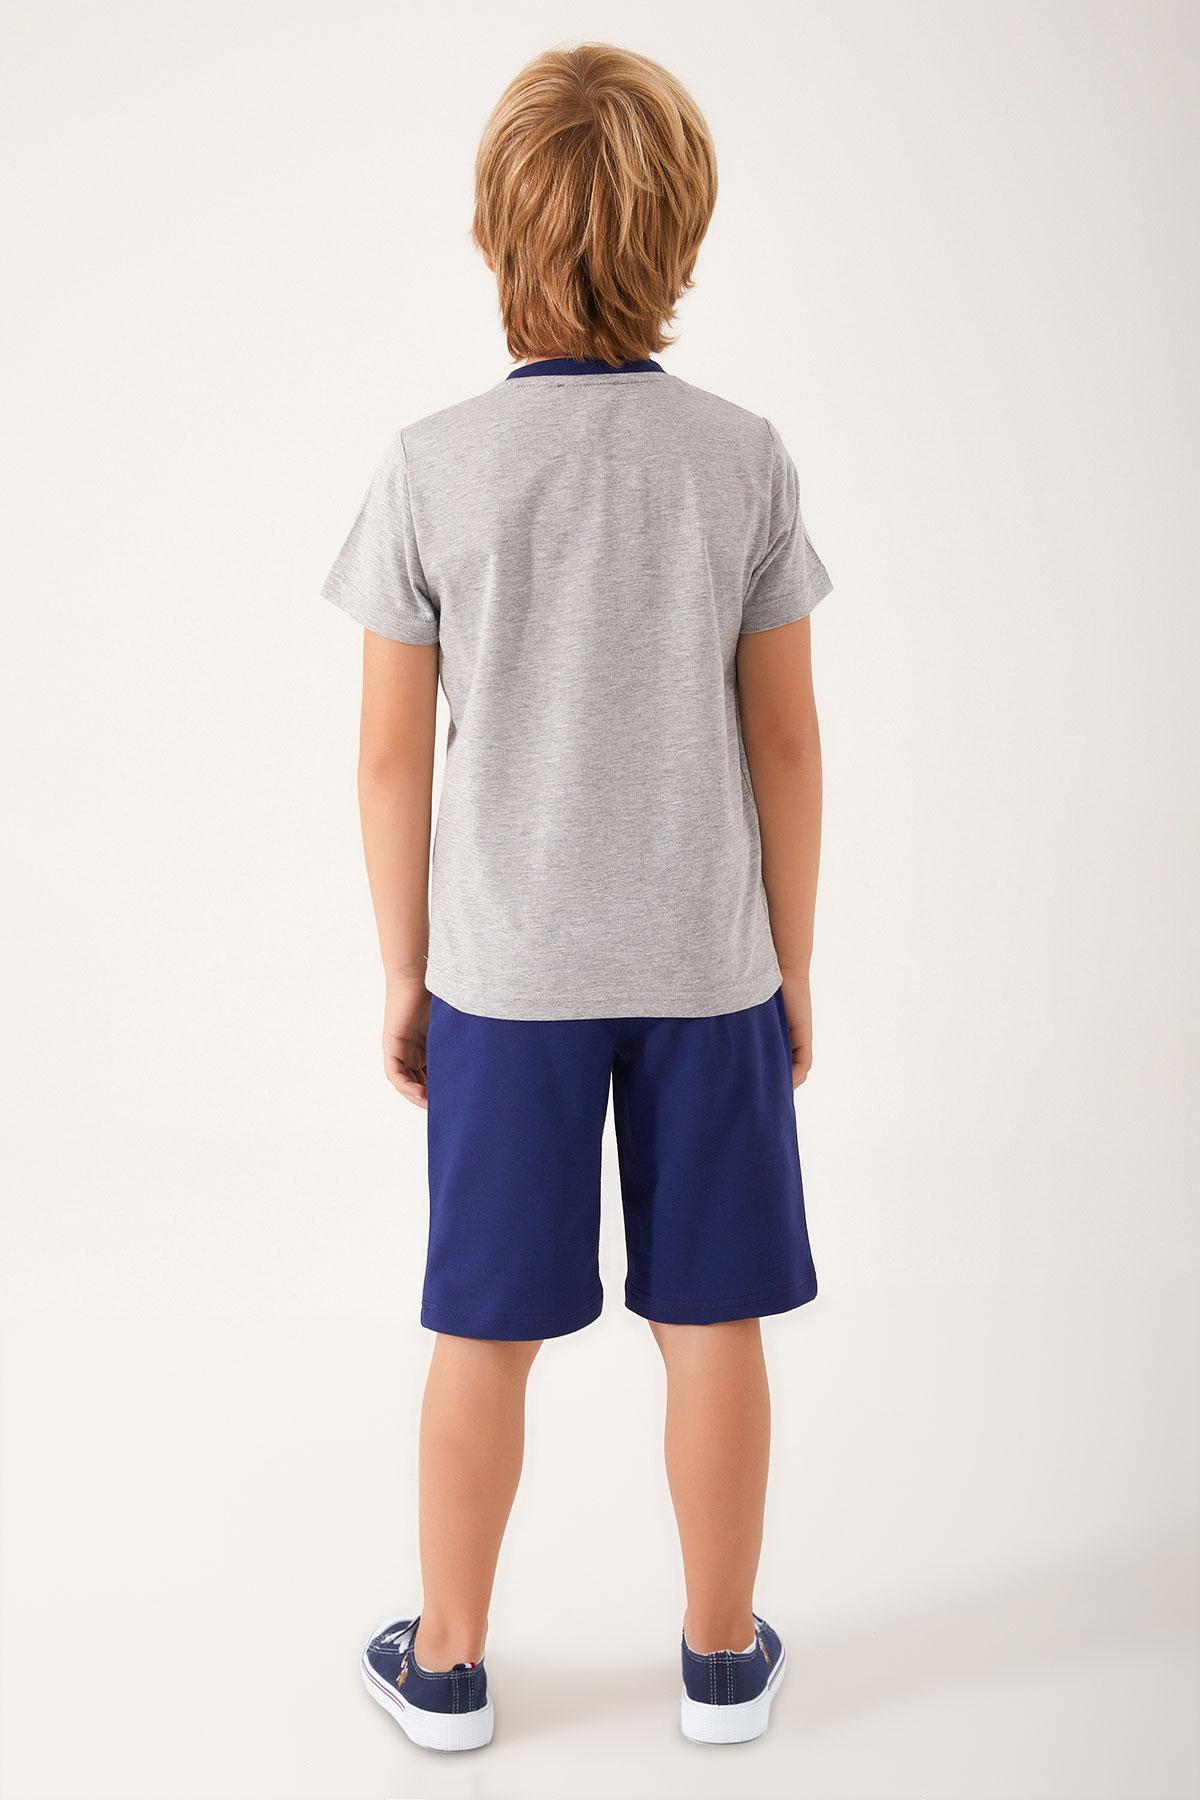 Selected image for U.S. POLO ASSN. Komplet šorc i majica za dečake US1307-G teget-sivi